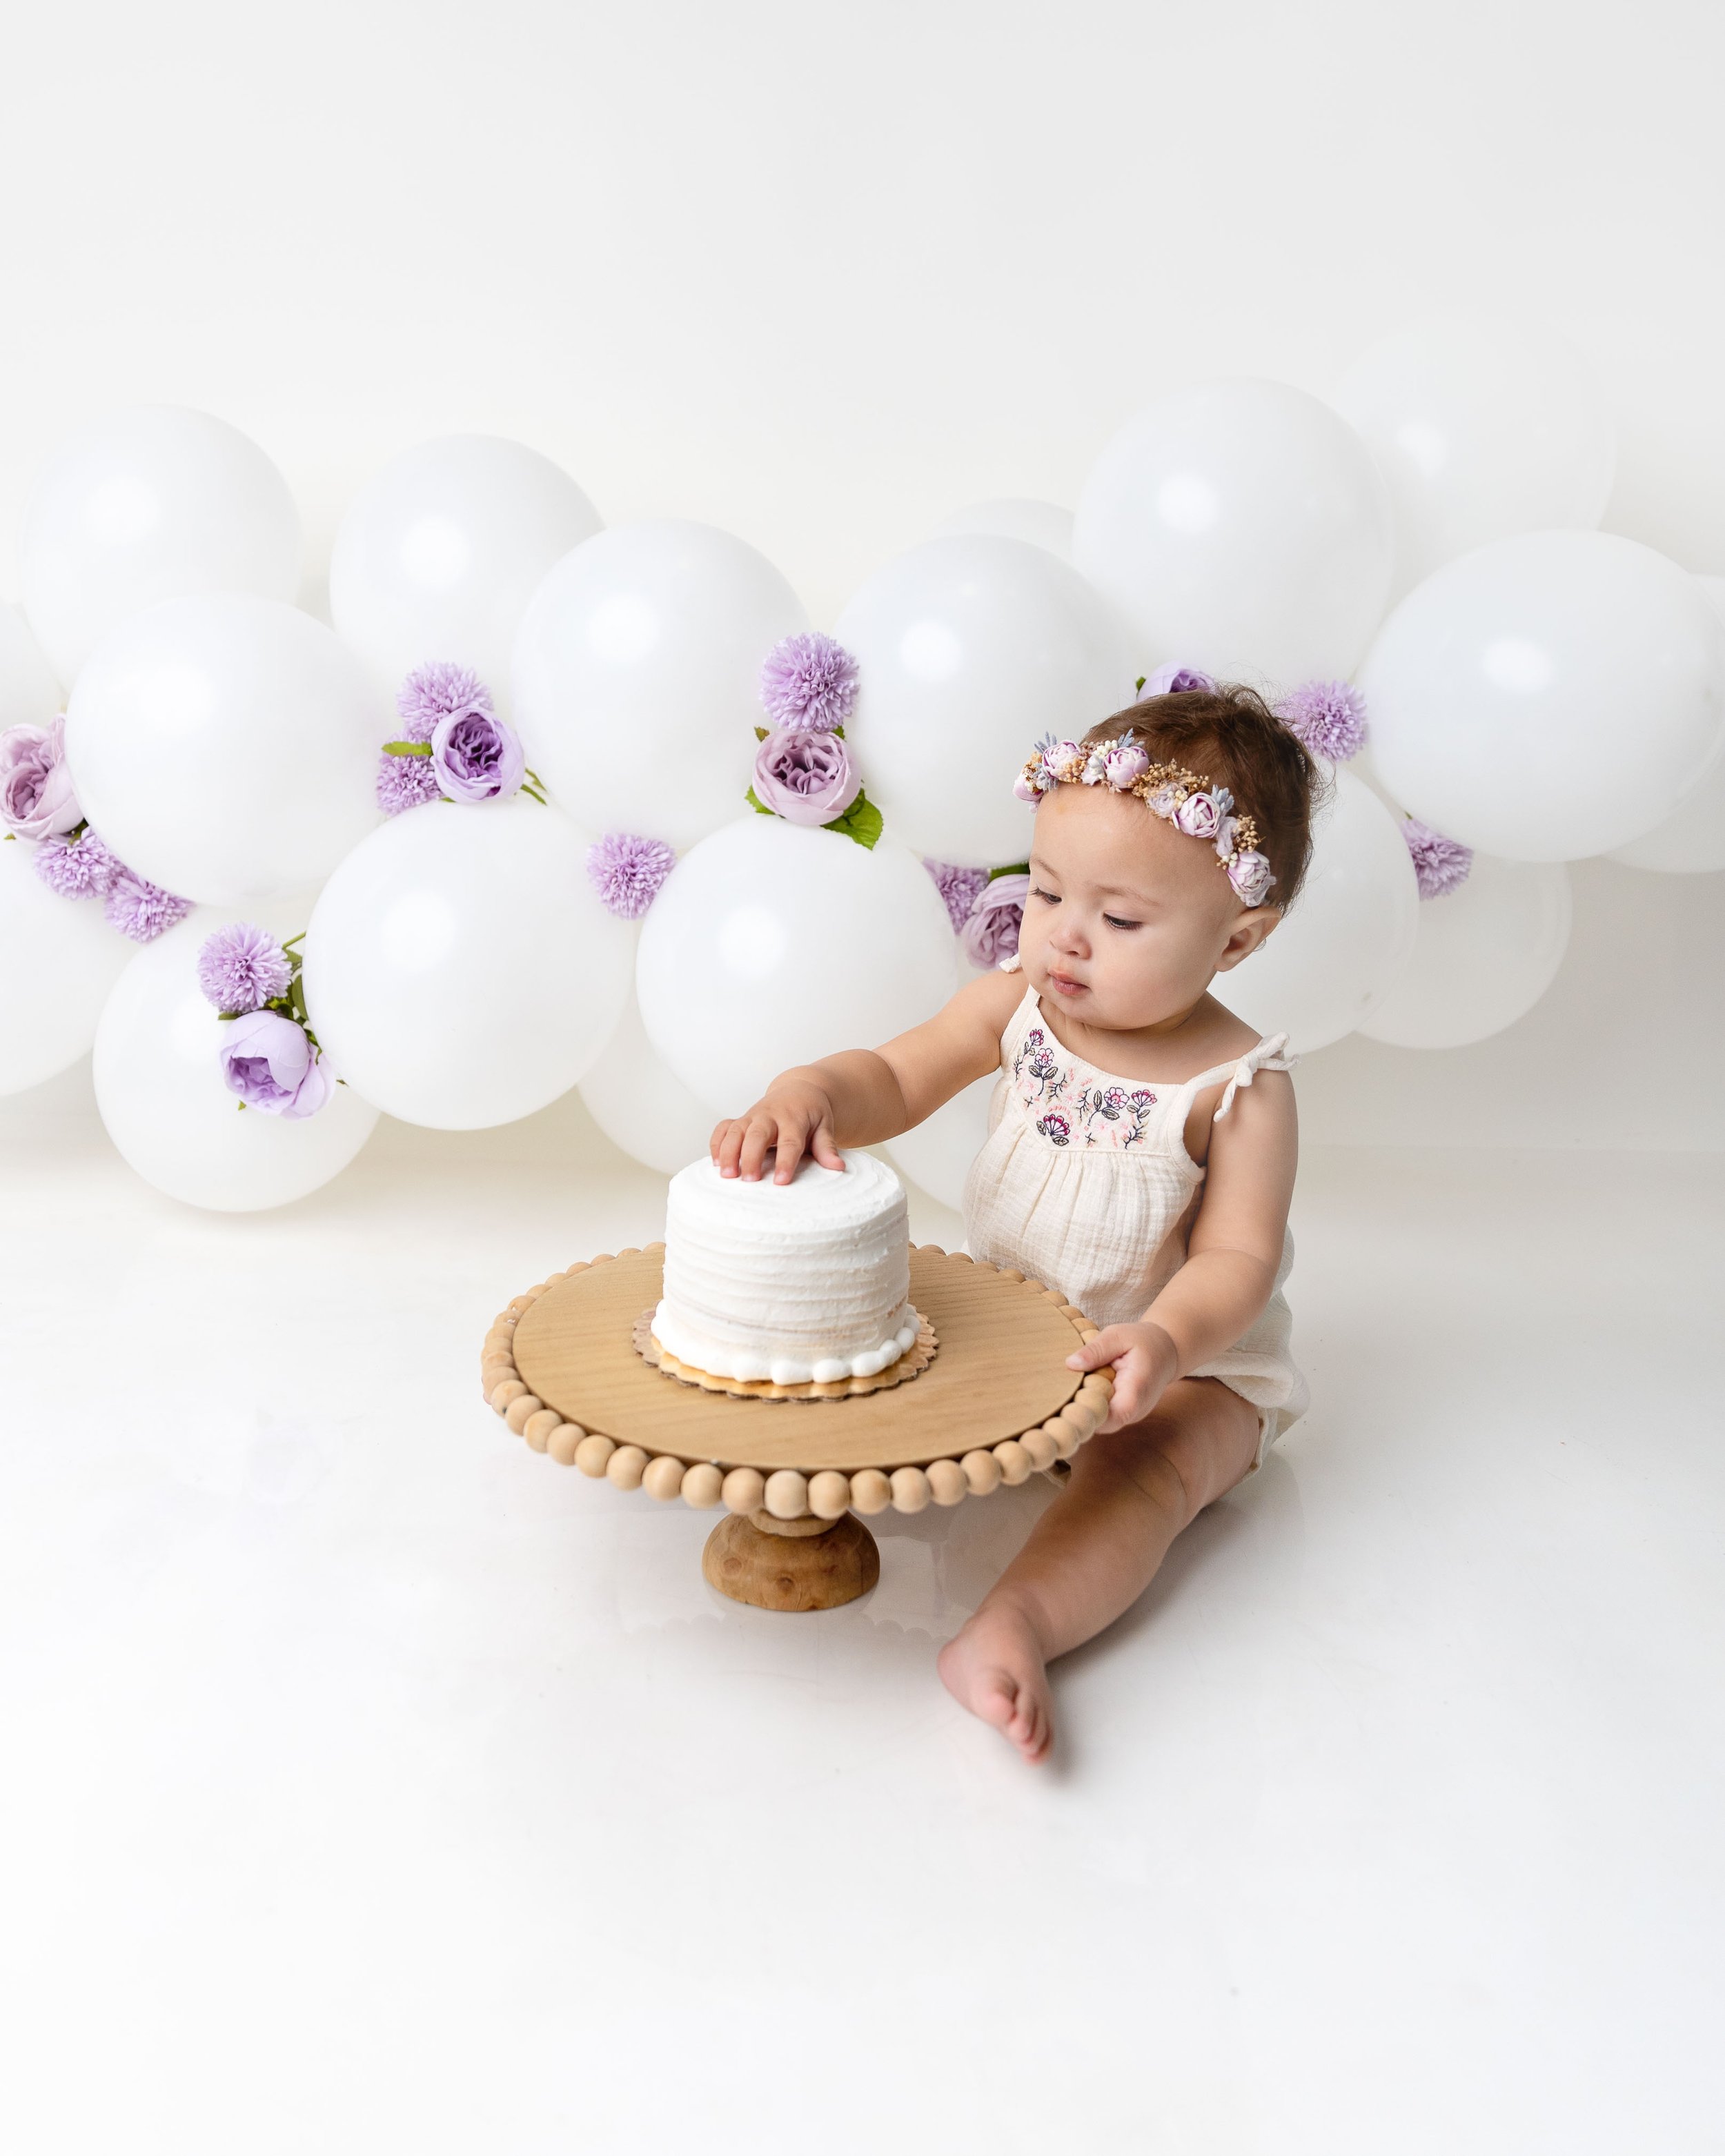 cake-smash-images-first-birthday-photography-baby-images-newborn-photography-spokane-washington-6.jpg